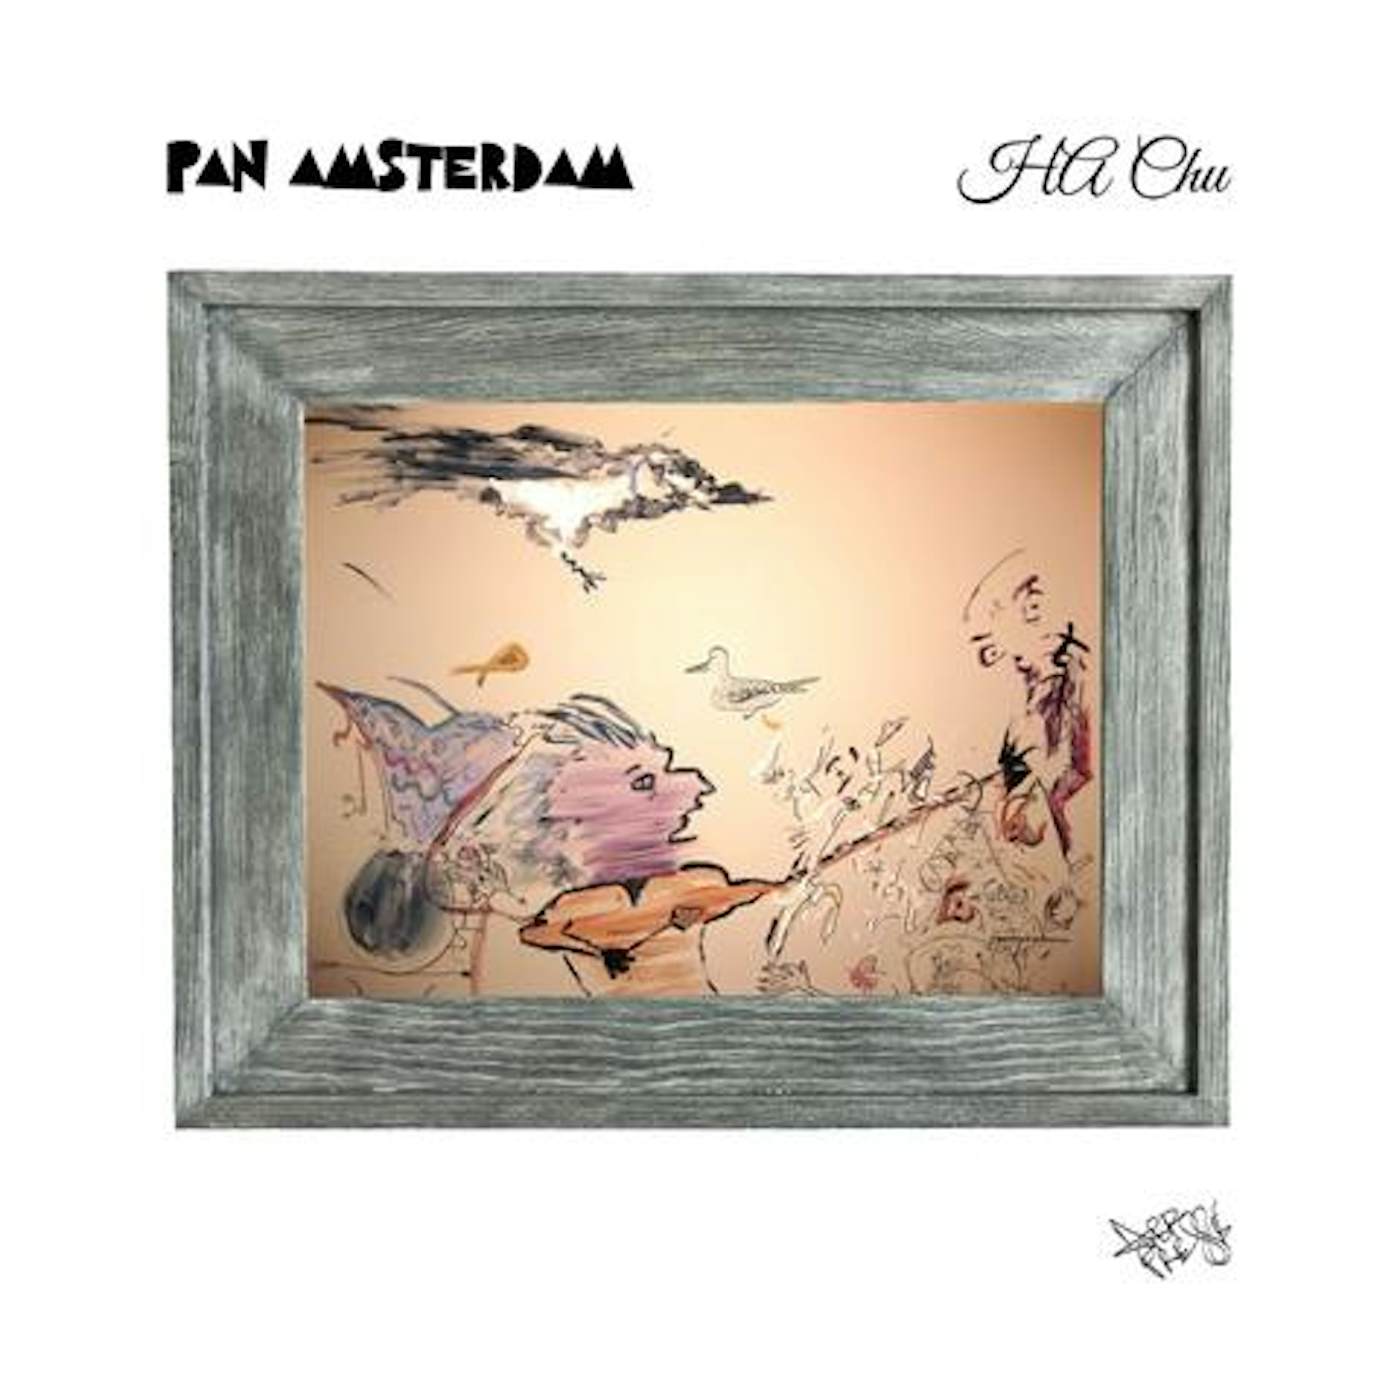 Pan Amsterdam HA CHU (IMPORT) Vinyl Record